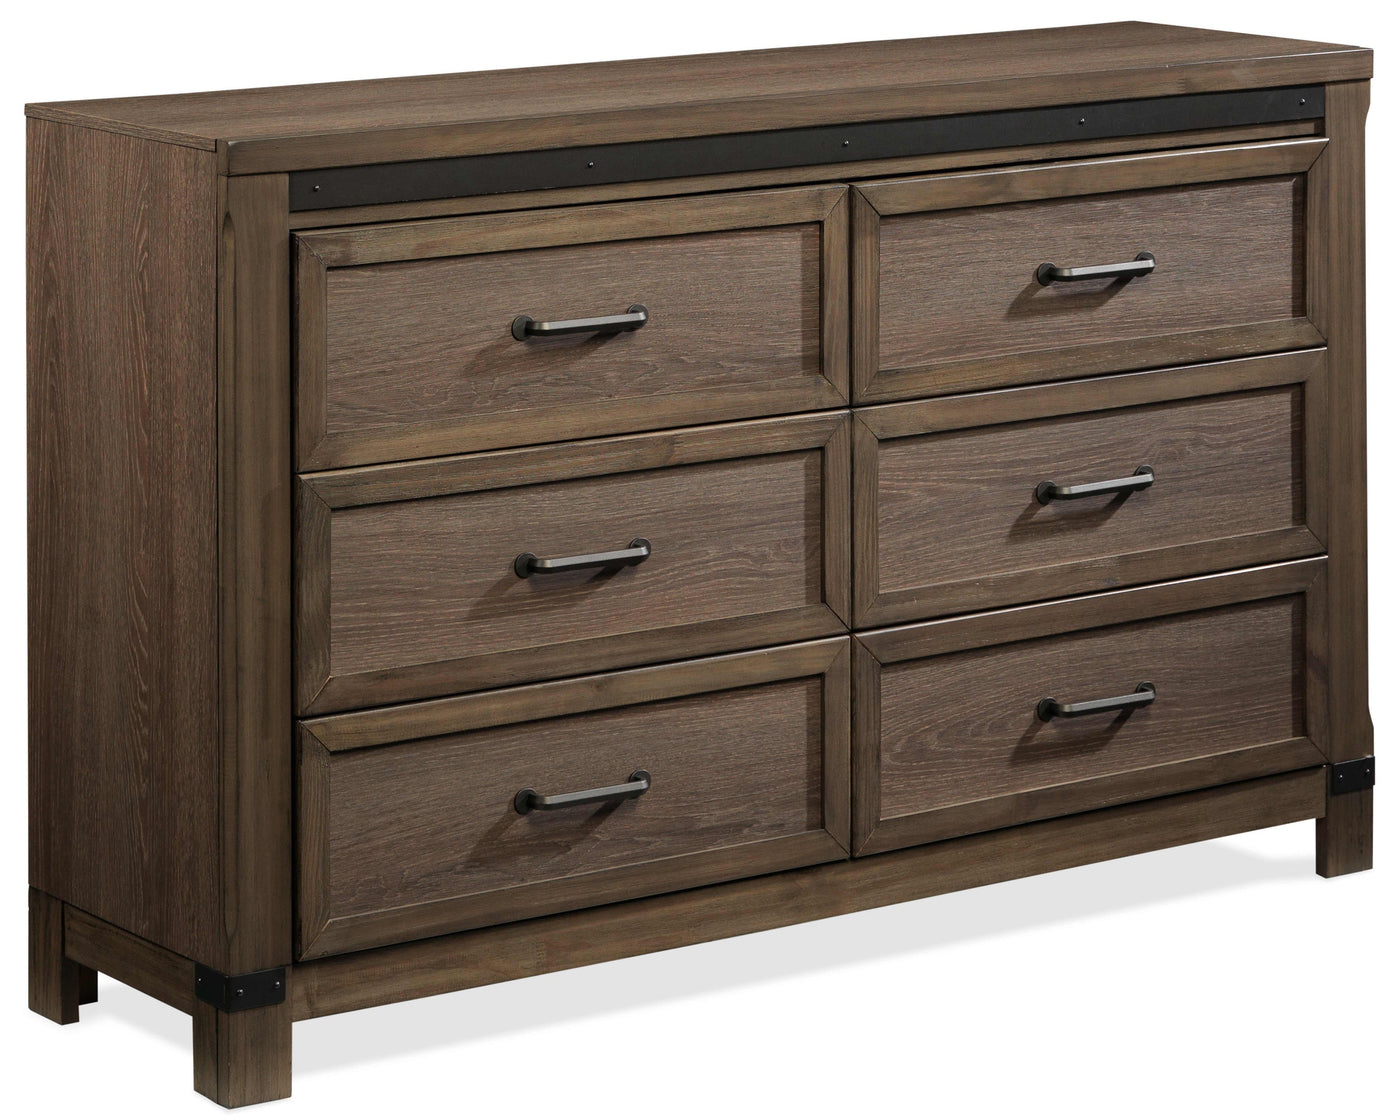 Rossco 6 Drawer Dresser - Rustic Oak